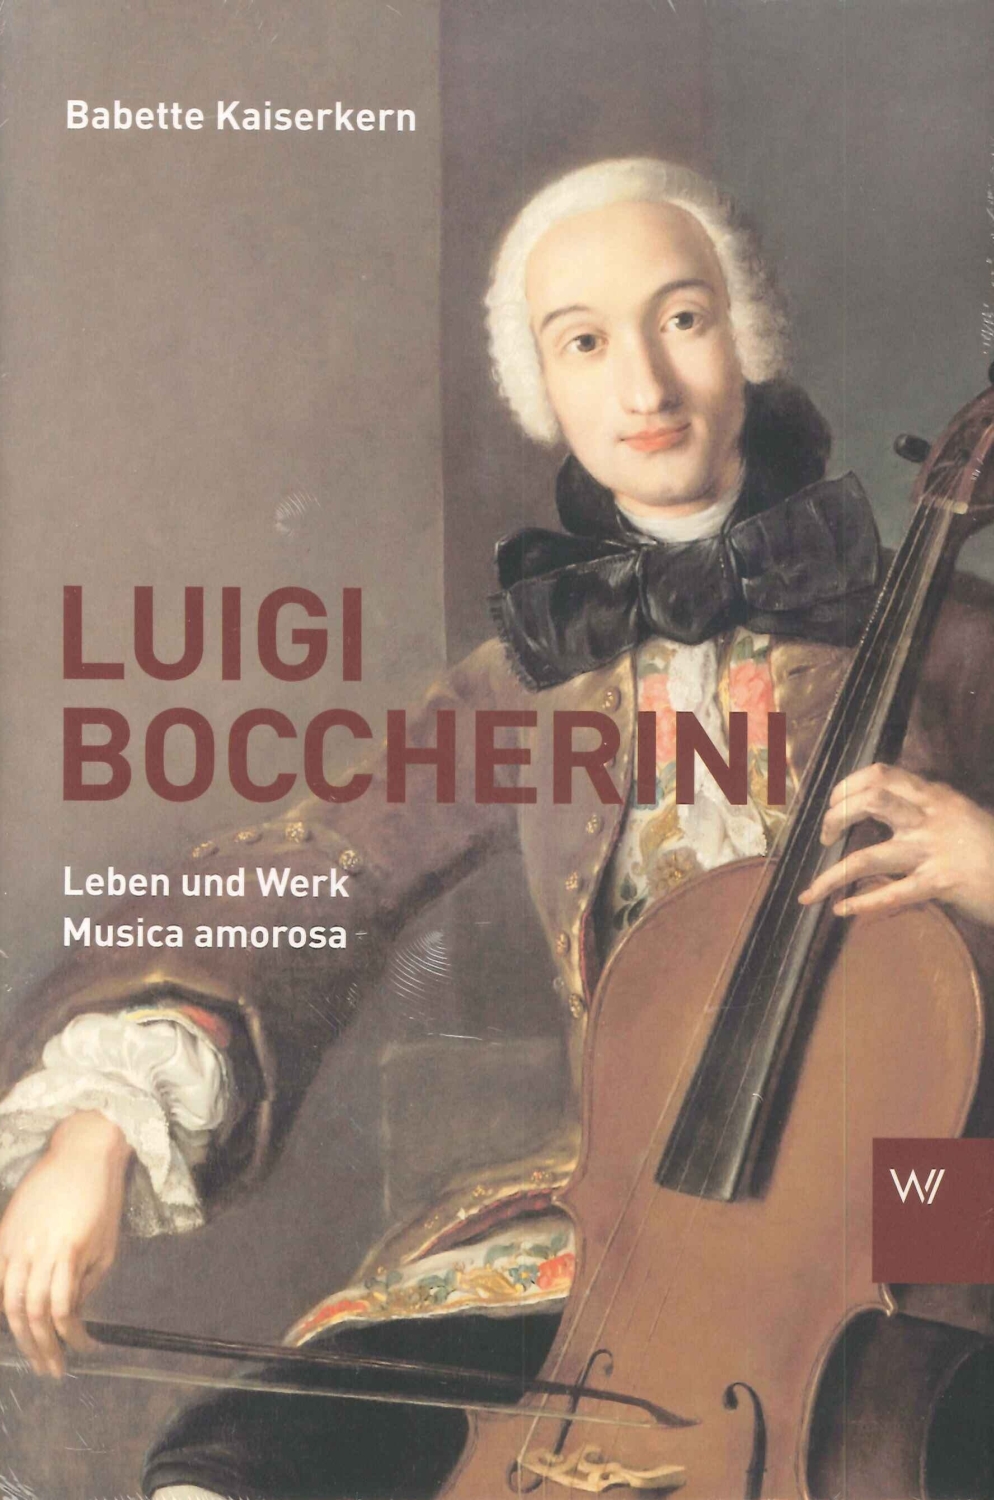 Babette-Kaiserkern-Luigi-Boccherini-Buch-_geb_-_0001.JPG